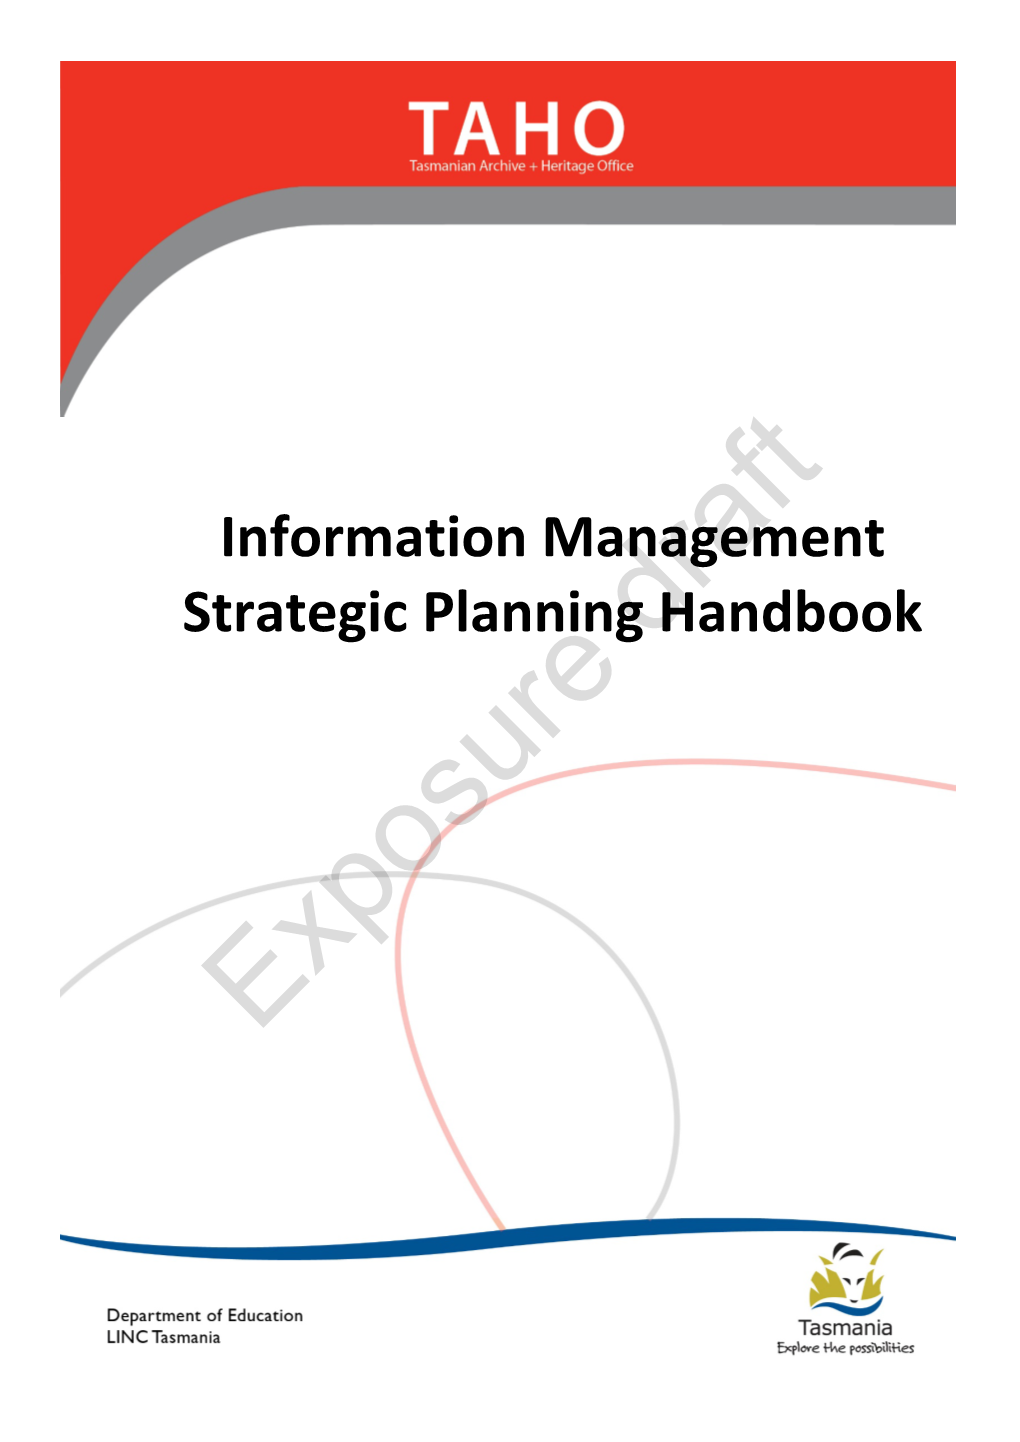 Information Management Strategic Planning Handbook Table of Contents